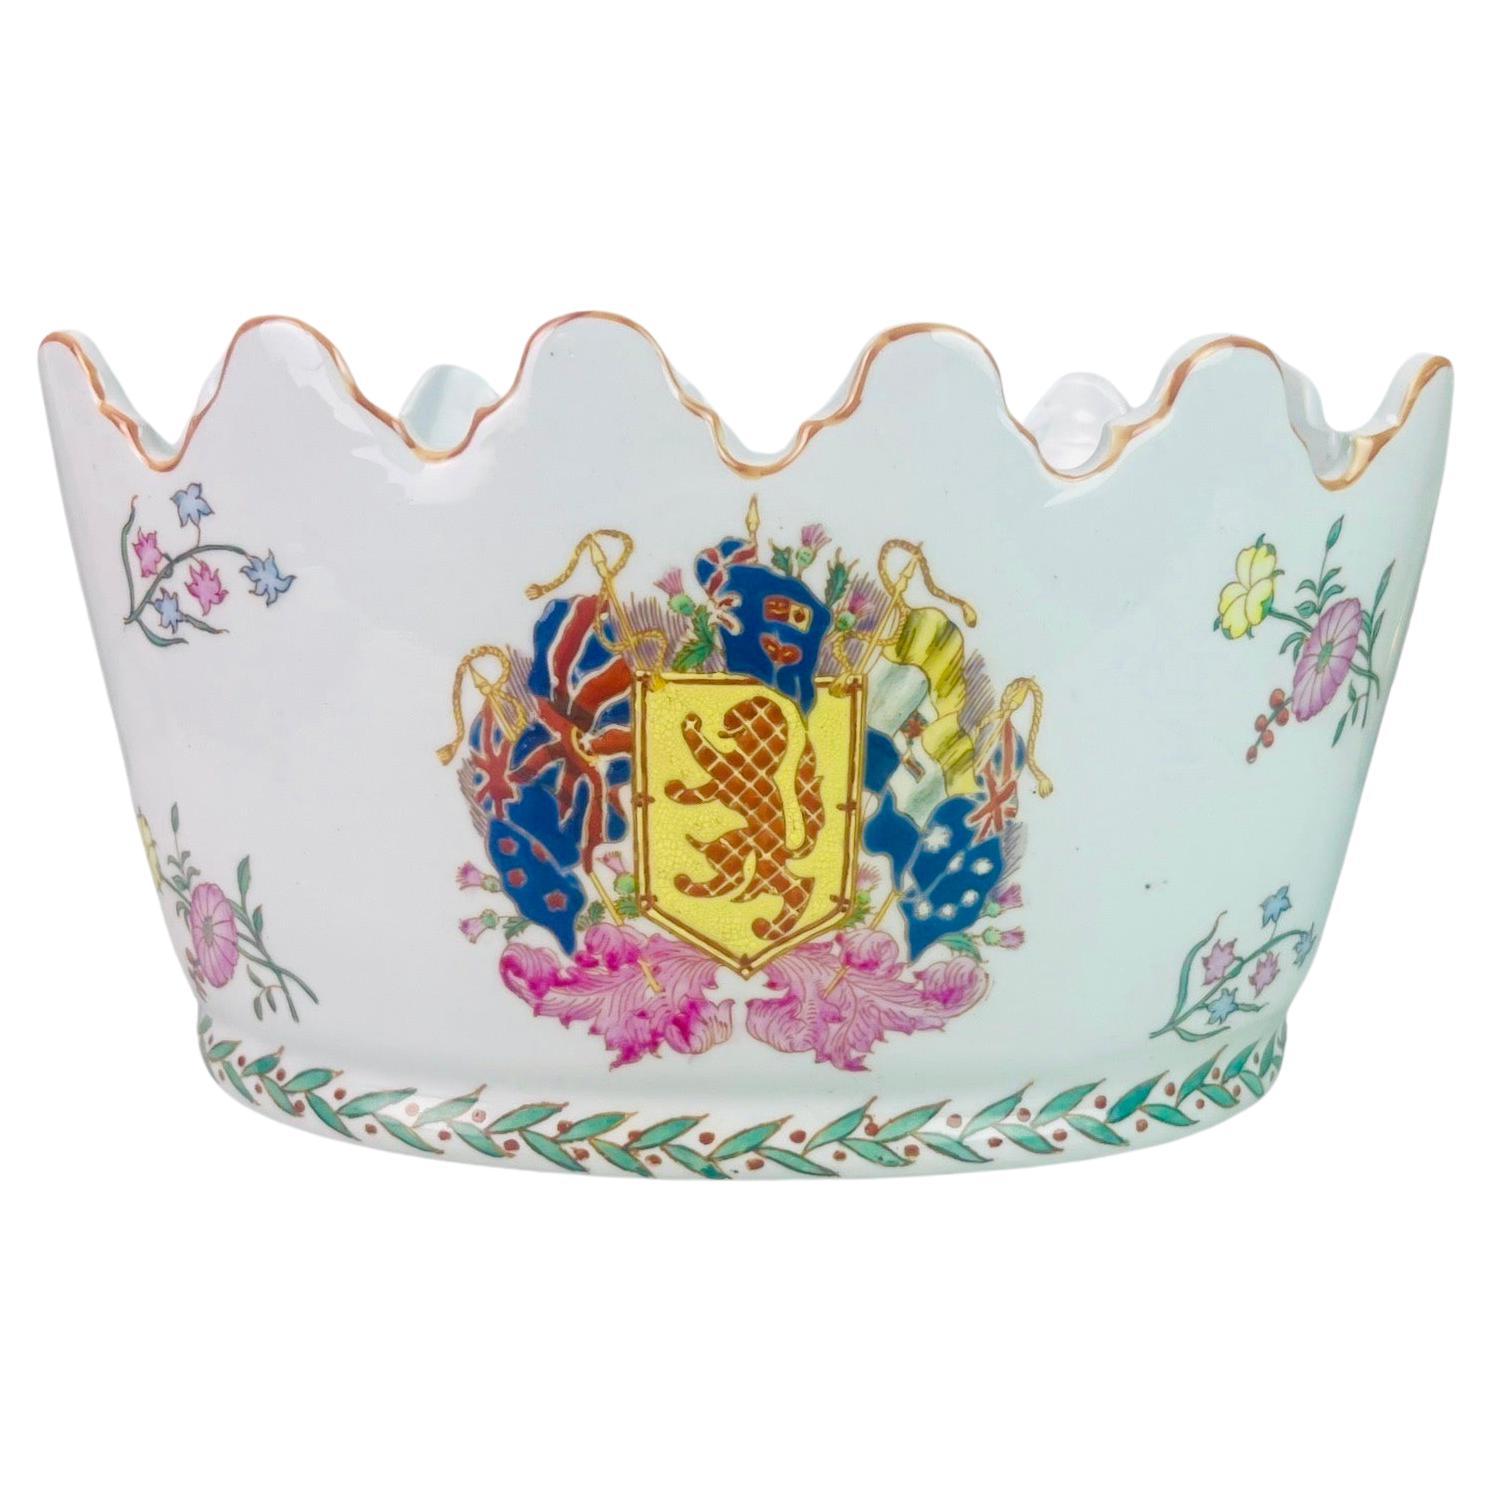 Chinese porcelain Cooler / Planter / Jar - Rose family - 19th - Qing China